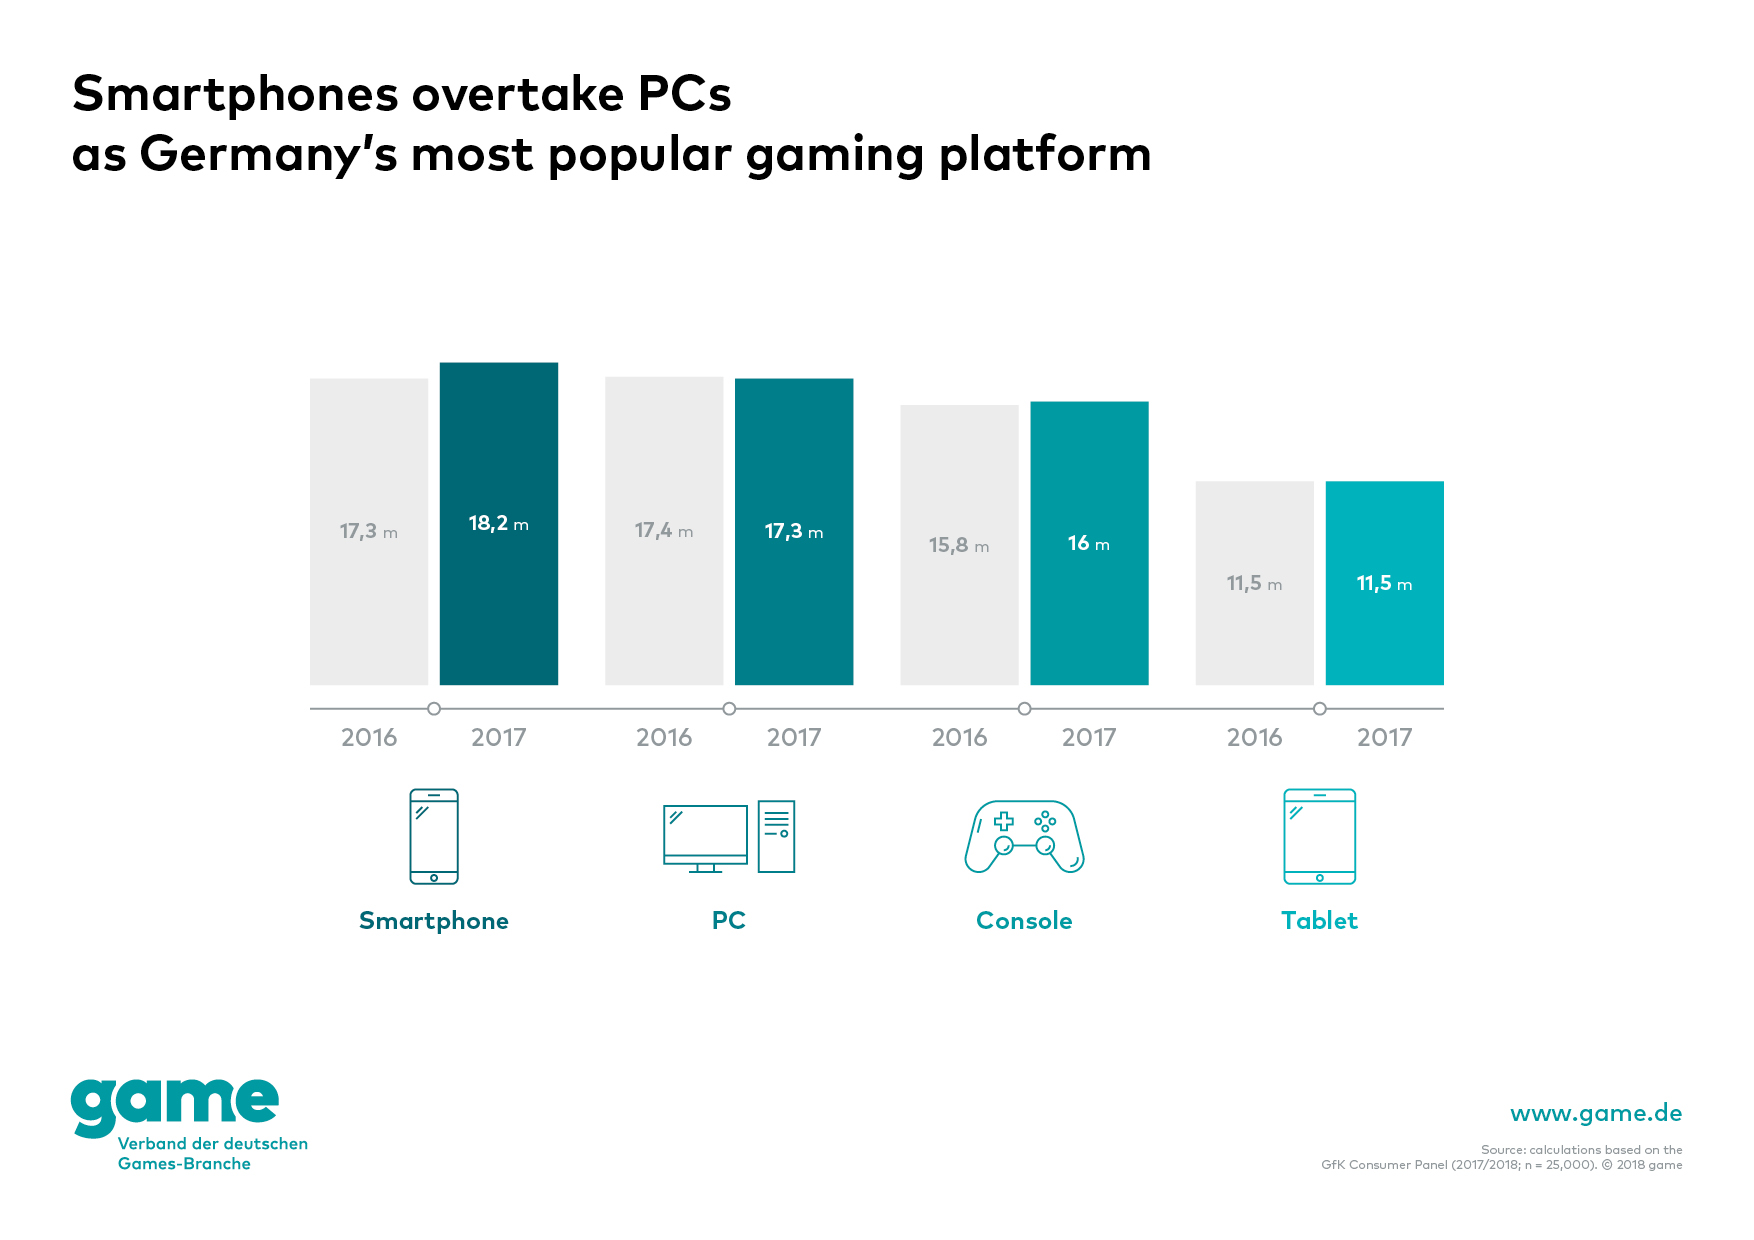 Popular gaming platforms in Germany 2017